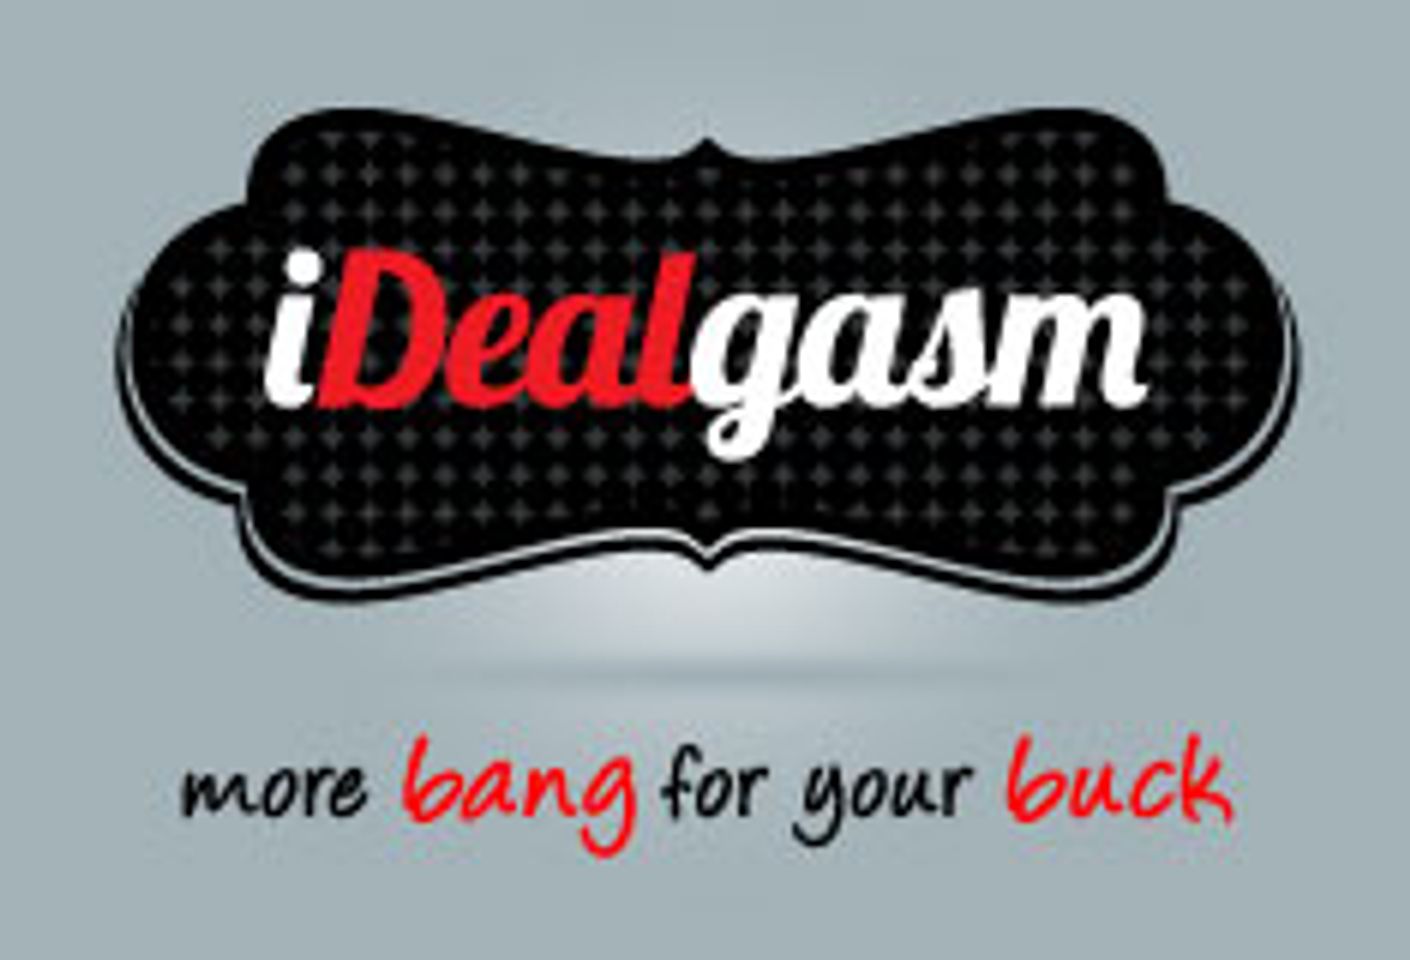 iDealgasm Offering Discounts on Exxxotica Exhibit Space